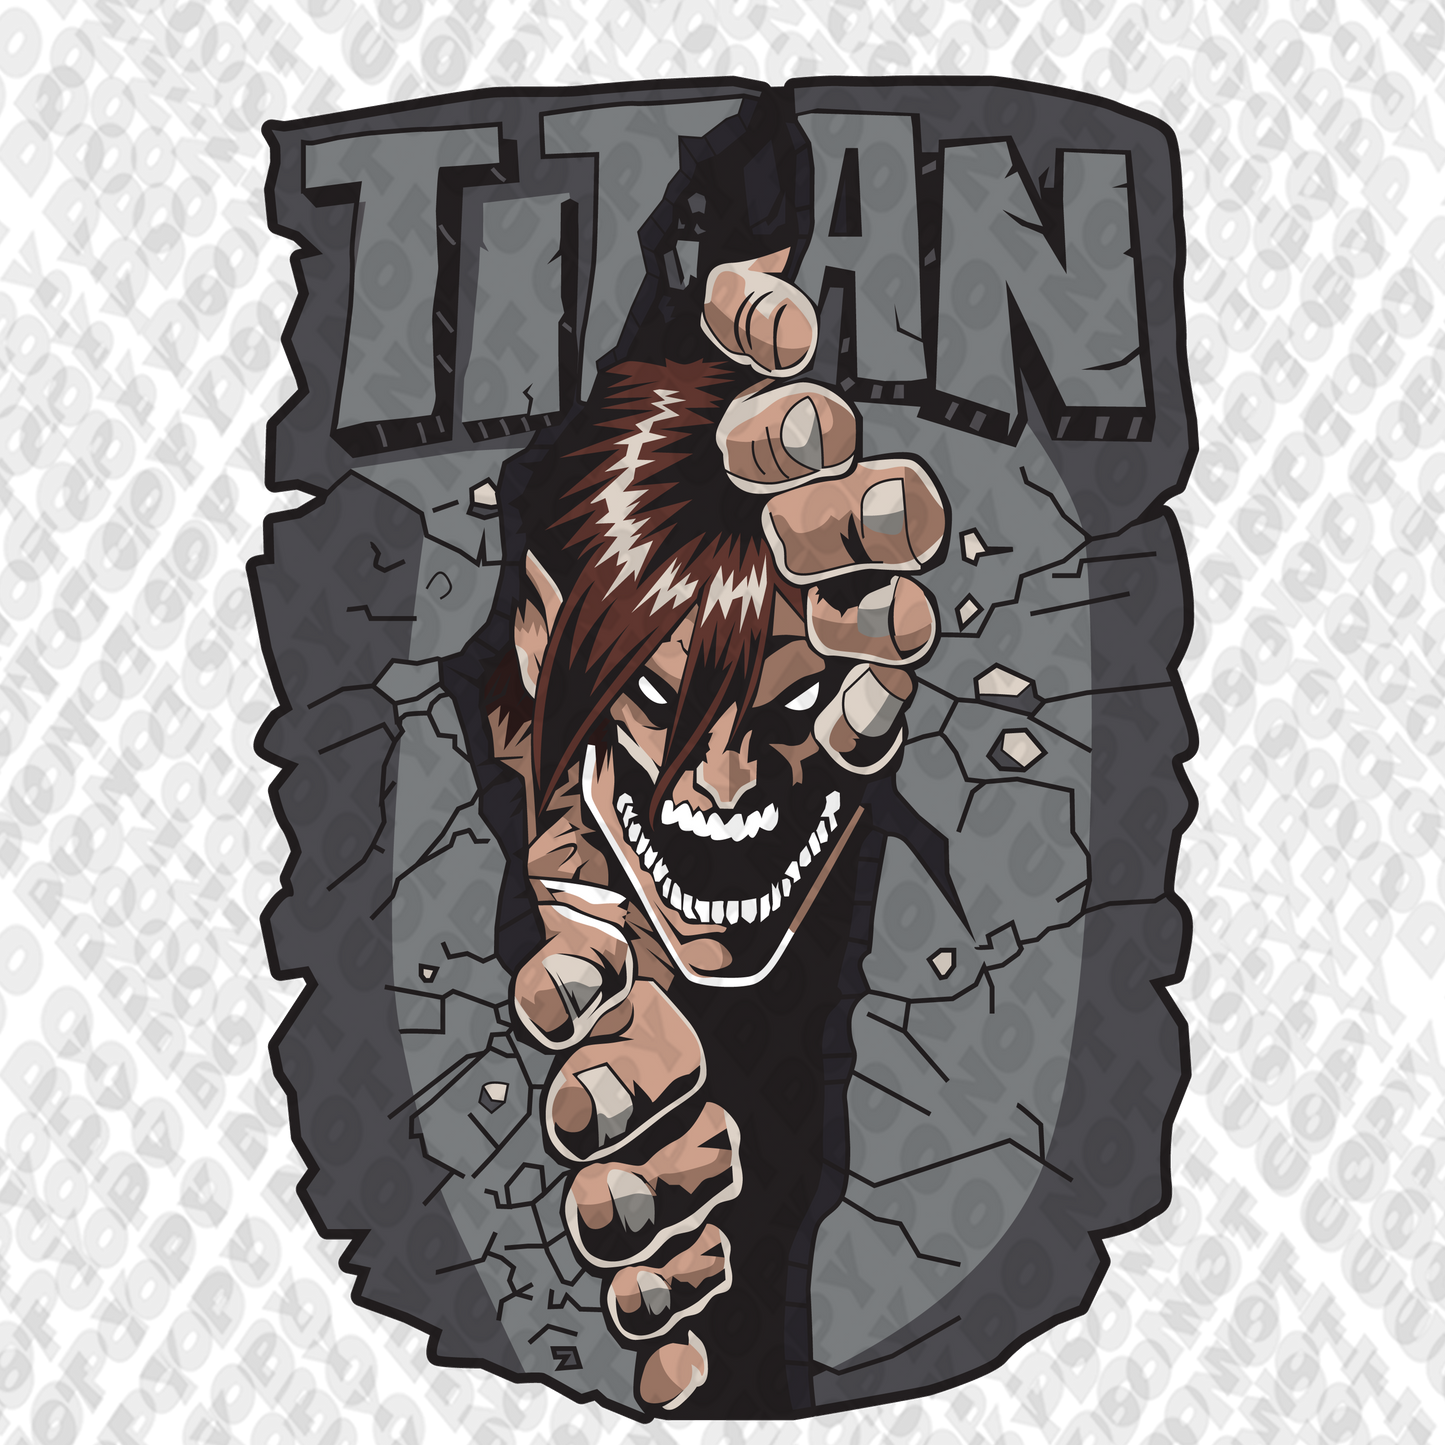 Attack Titan Break the Walls